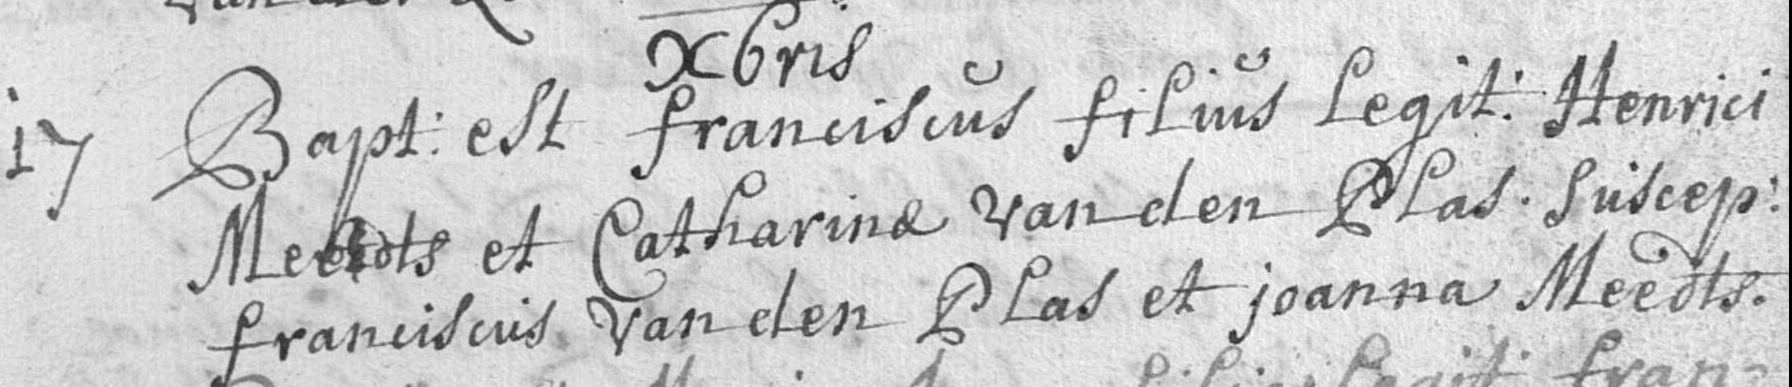 1740-FranciscusMeedts17Dec1740HenriciMeedtsCatharinavandenPlas.jpg